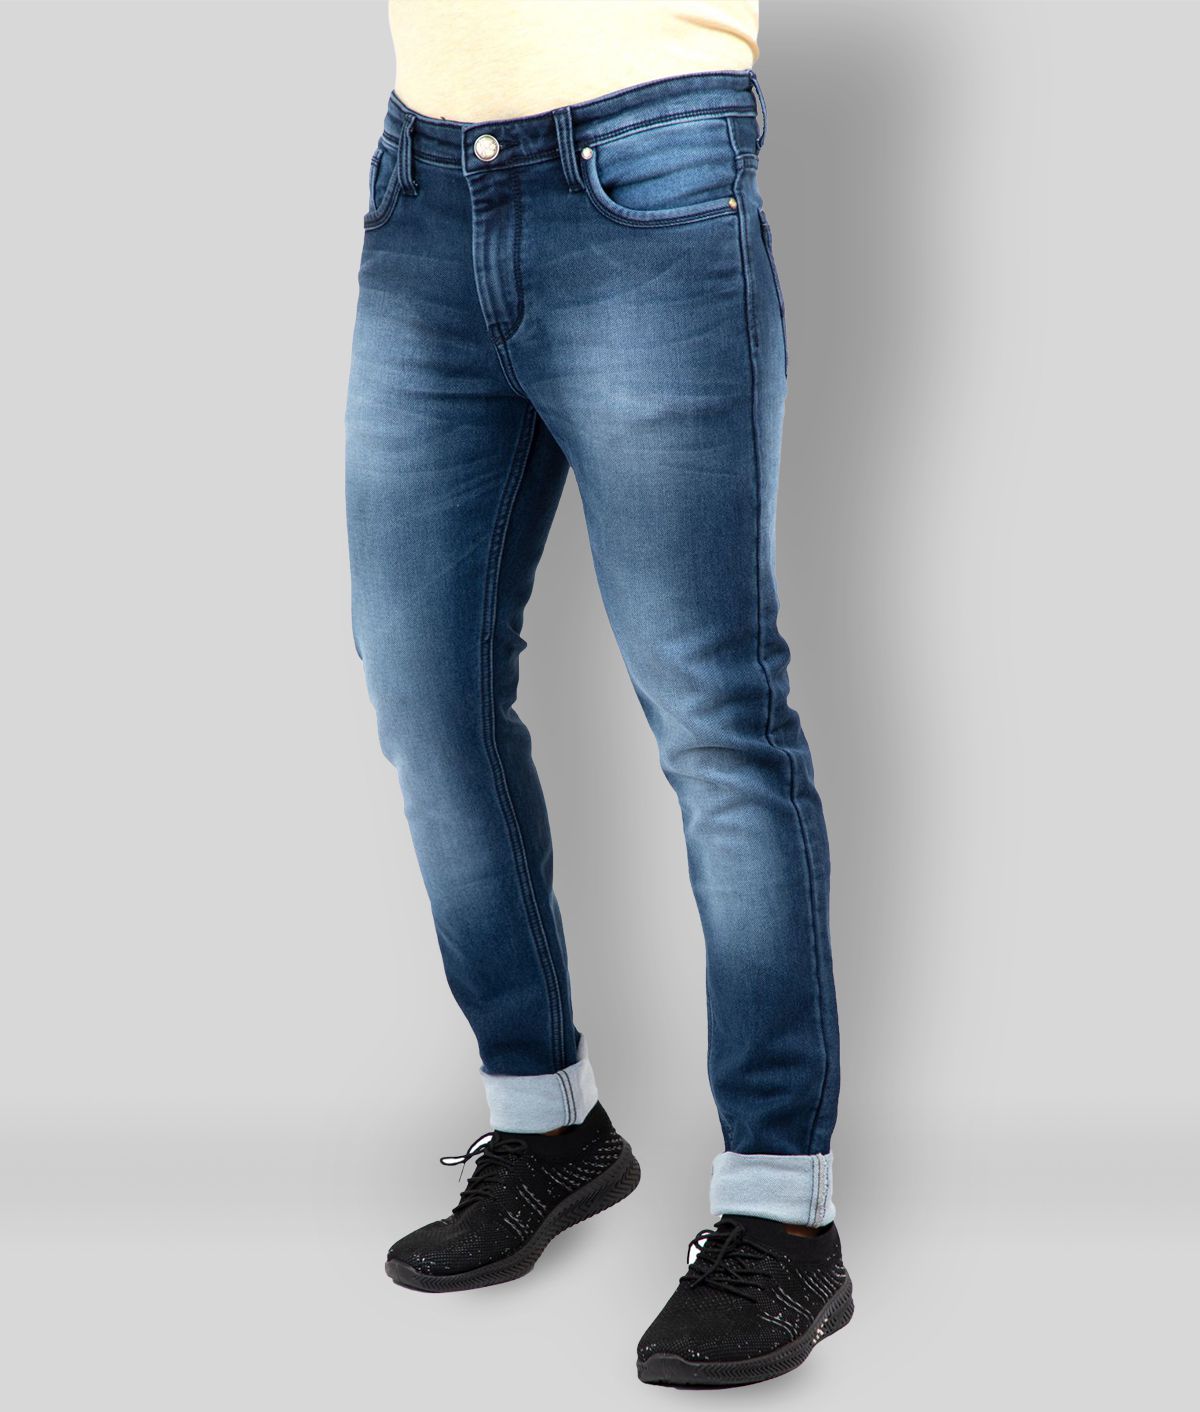 Hasasi Denim - Blue 100% Cotton Regular Fit Men's Jeans ( Pack of 1 )